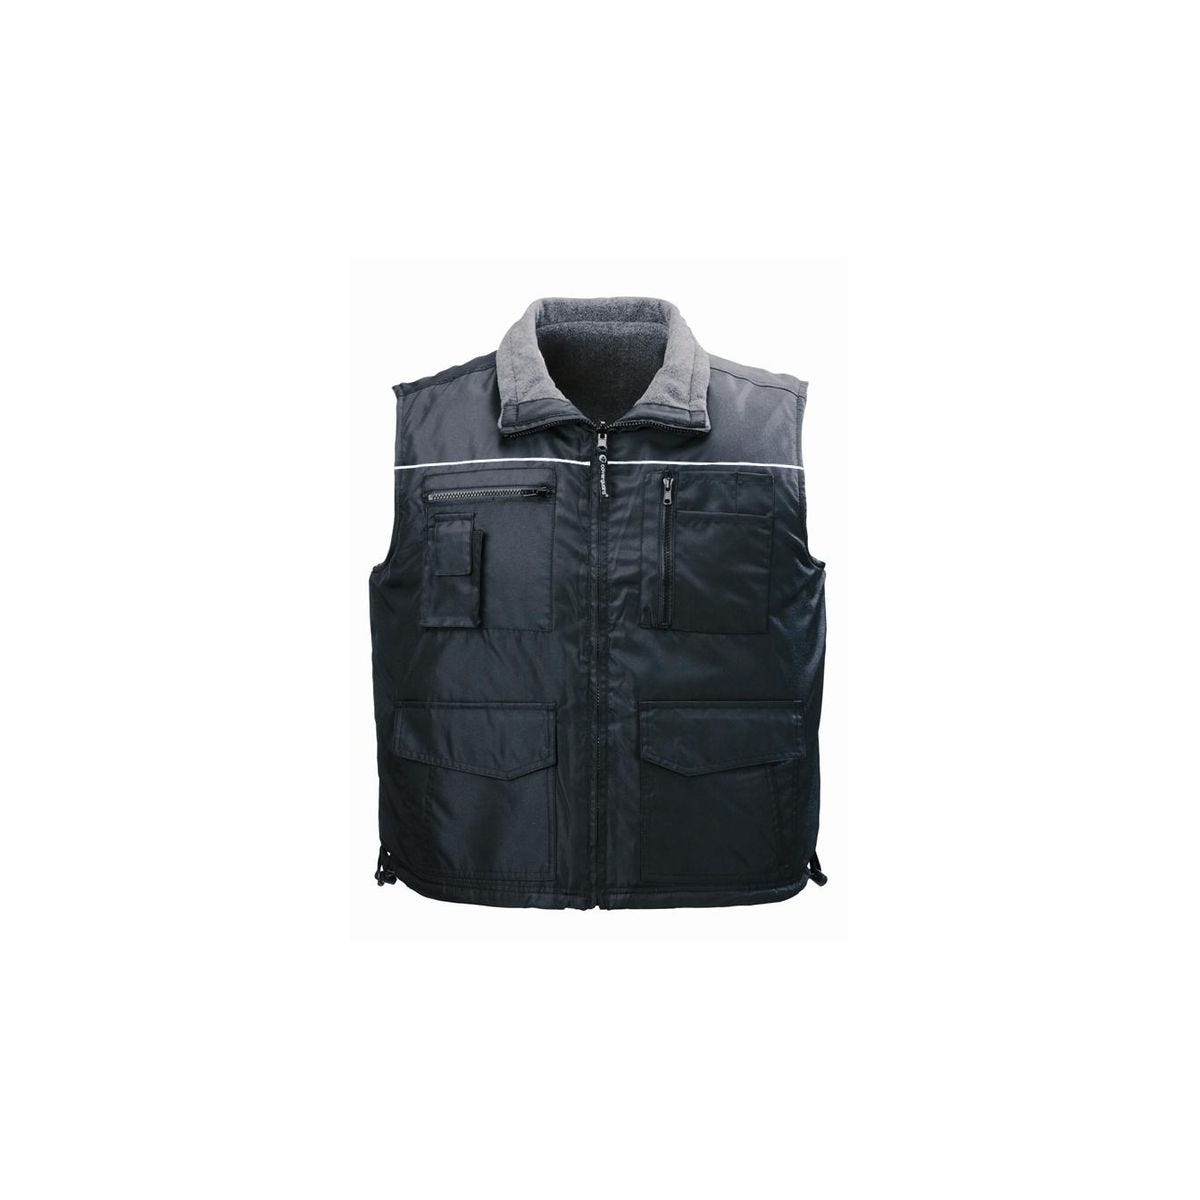 CARISTE Gilet Froid réversible noir, Polyester Oxford + Polaire 280g/m² - Coverguard - Taille M 0